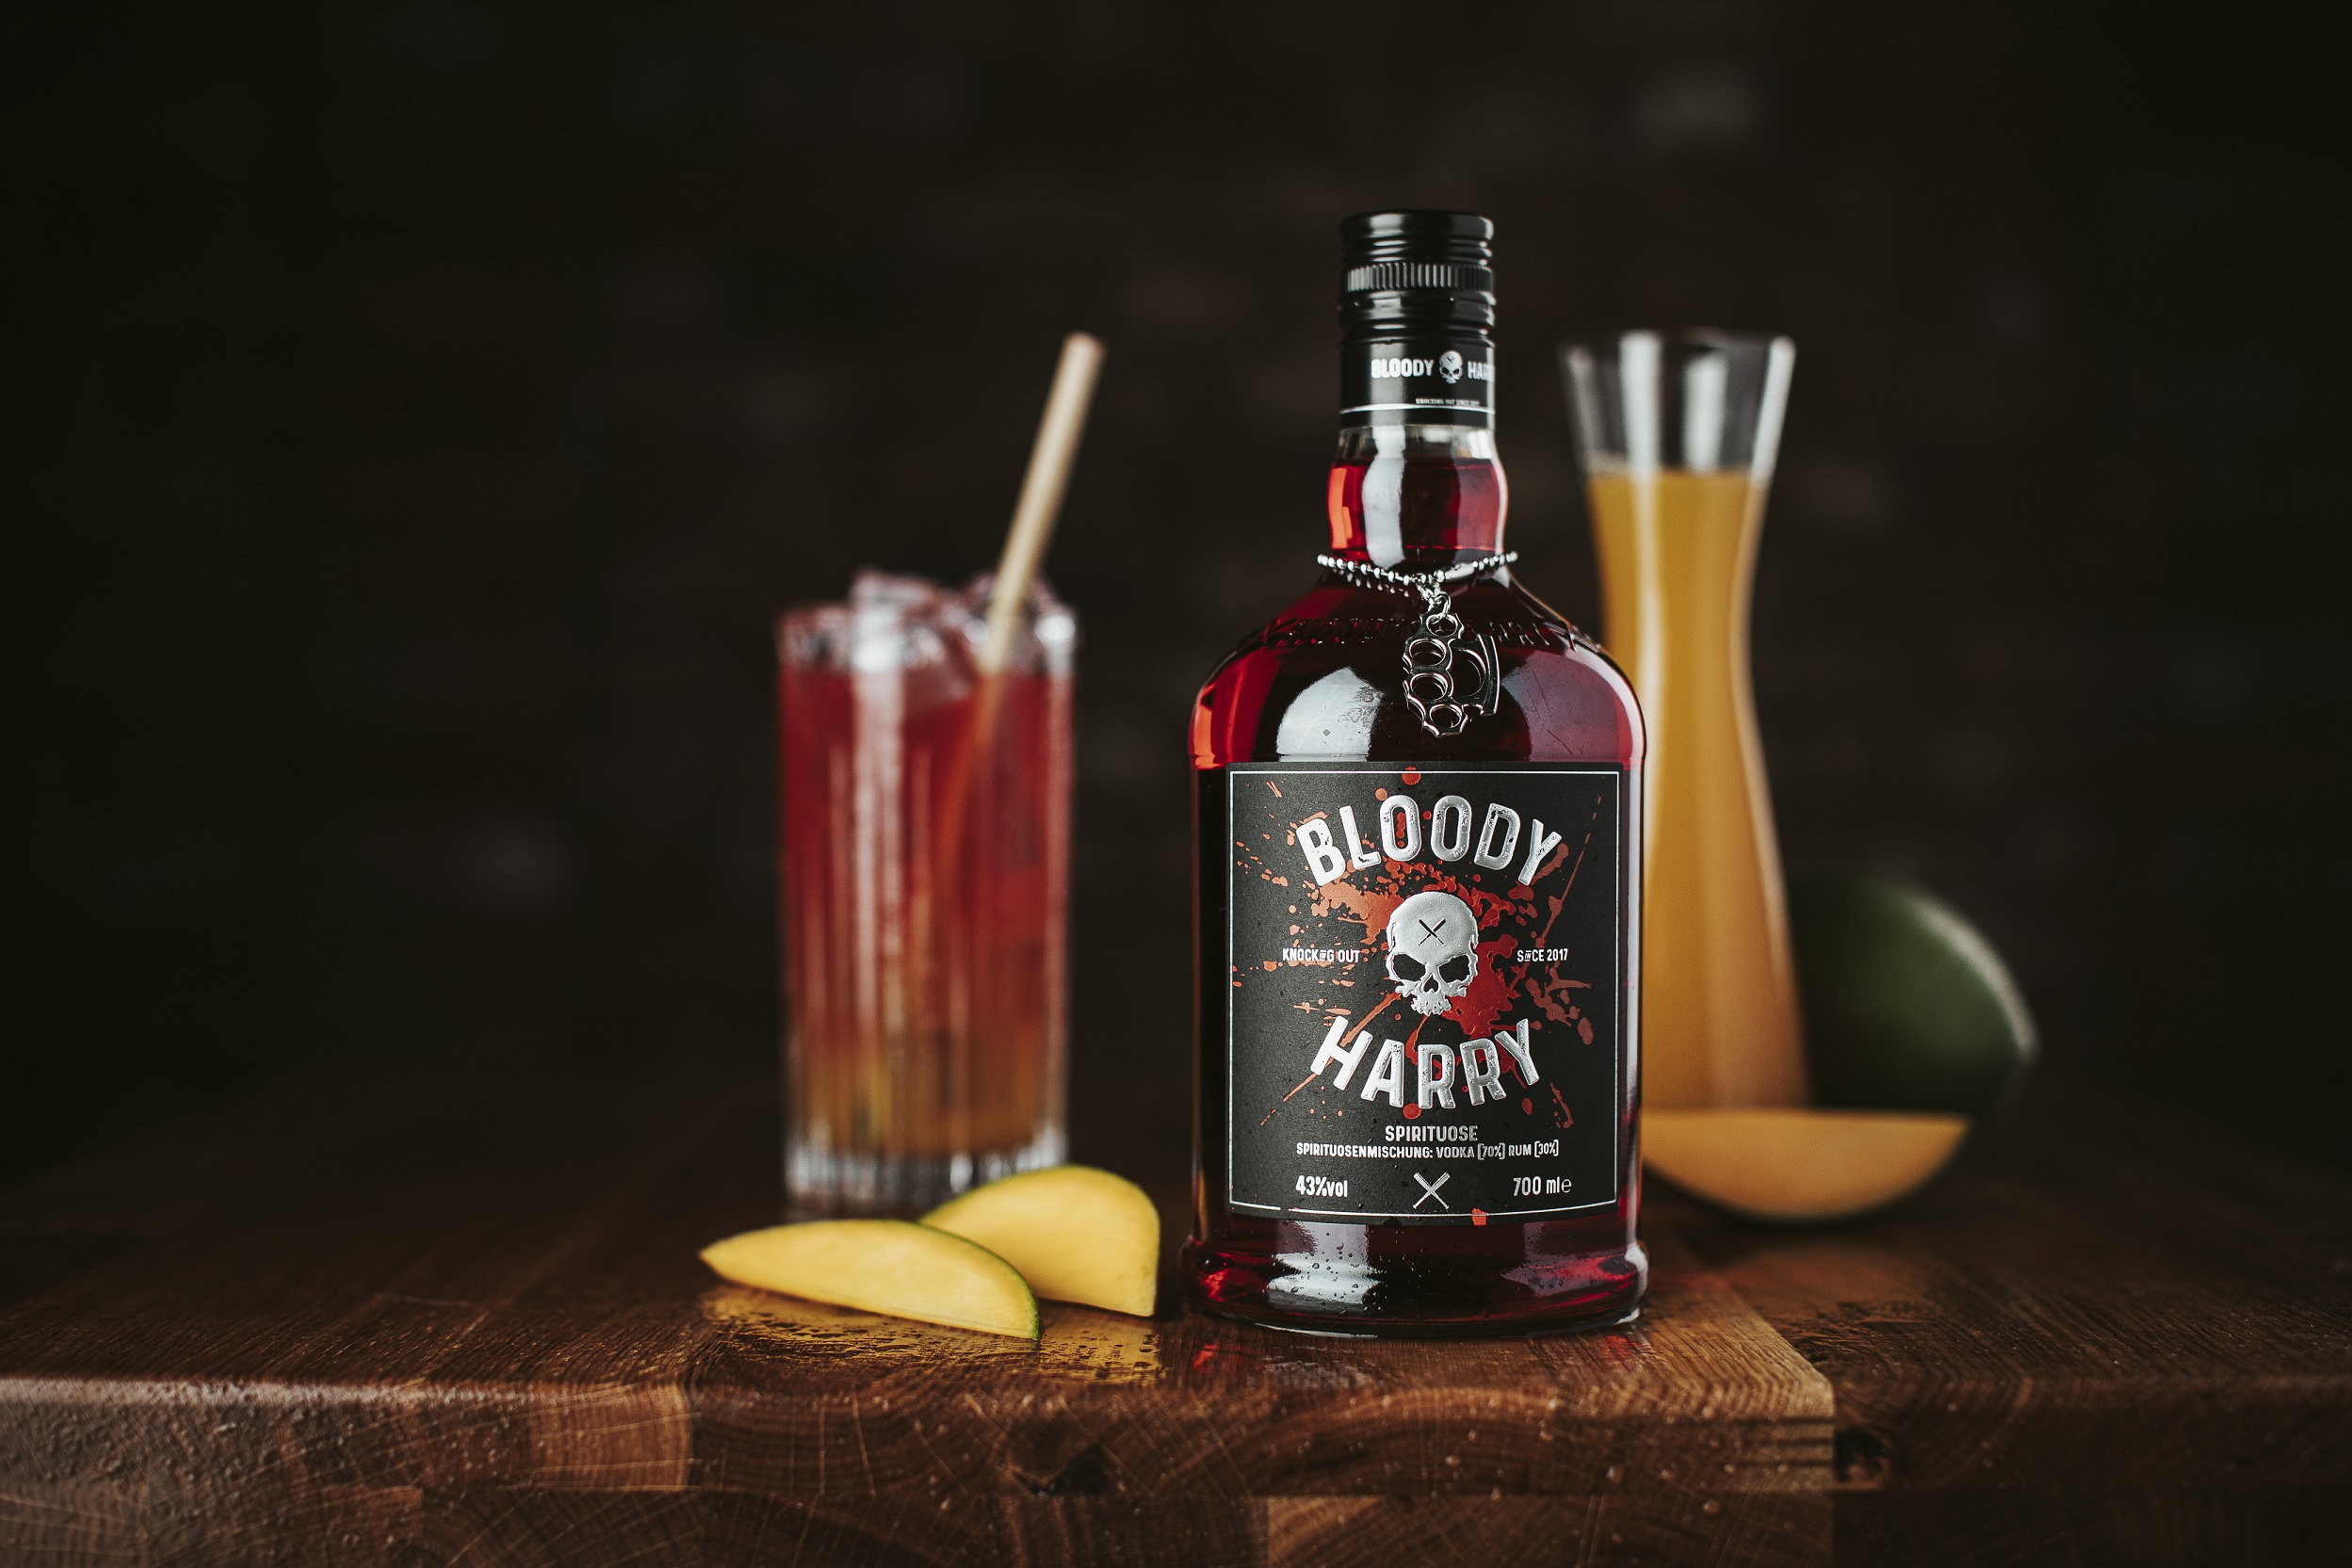 BLOODY HARRY Rum - Vodka - Spirituose 43%vol, 0,7l